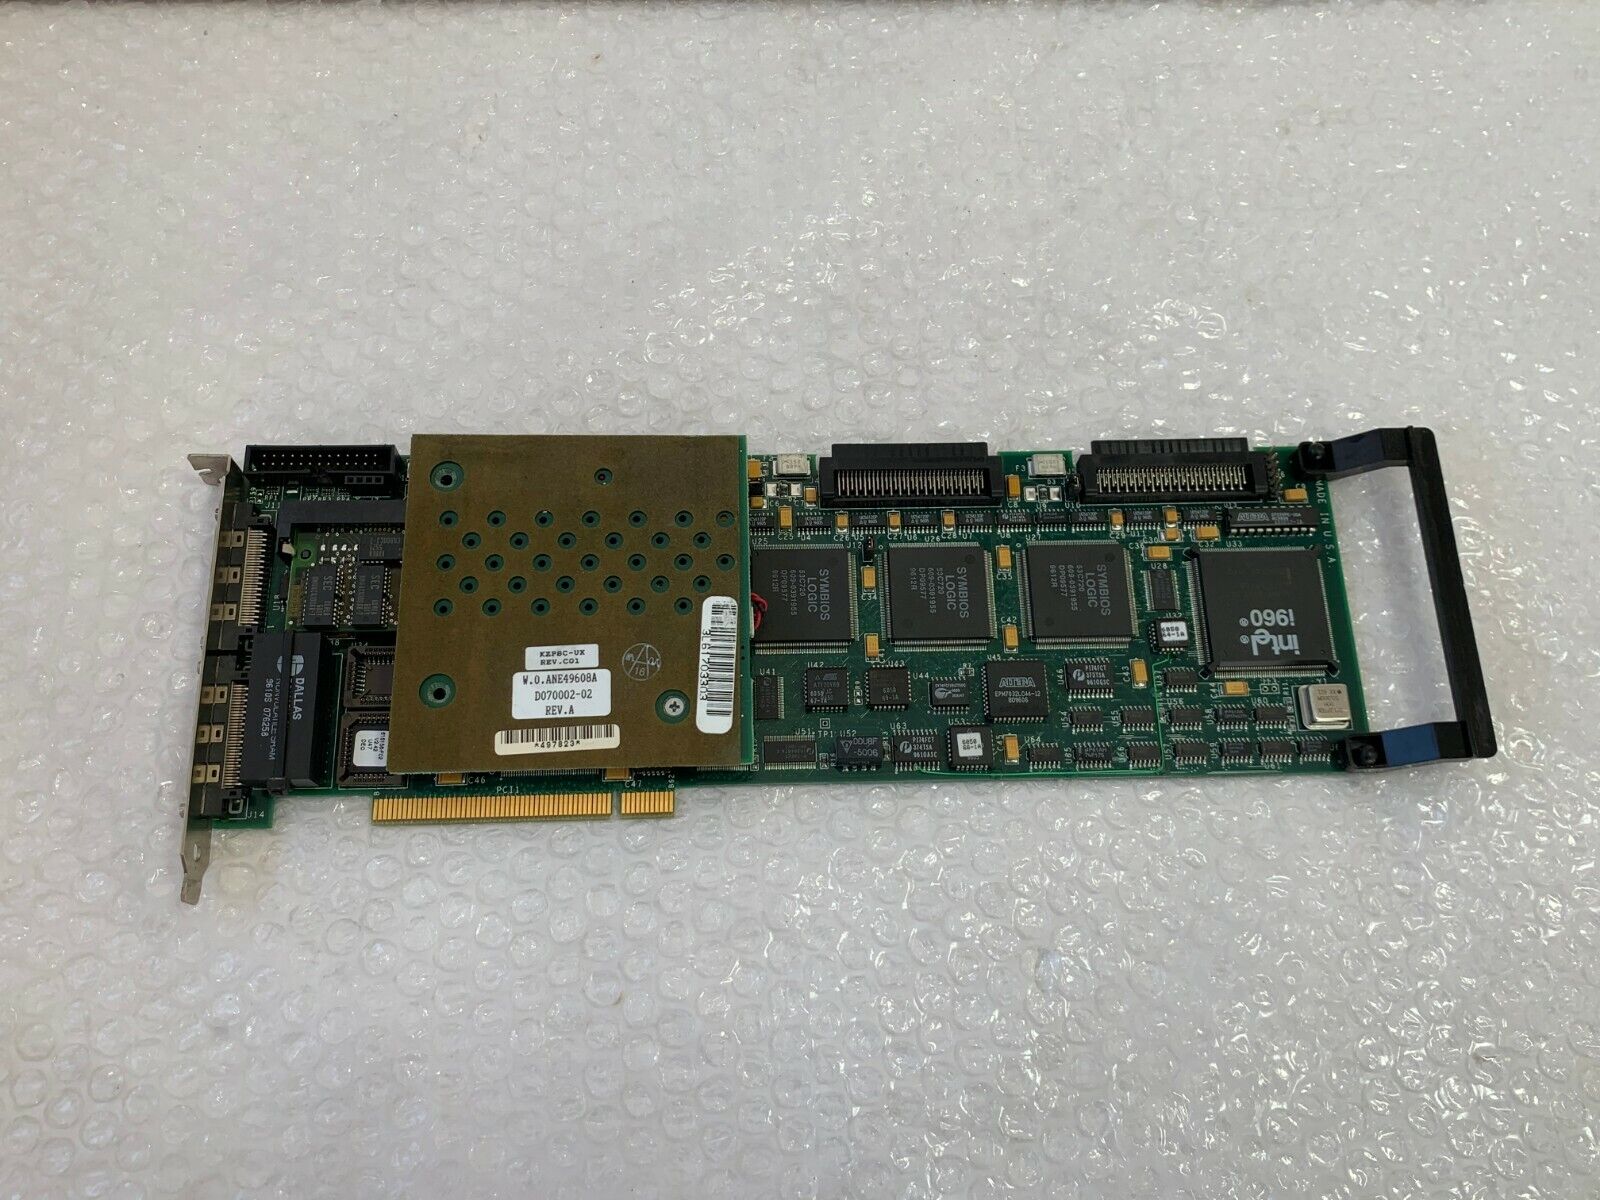 KZPSC-XB 3 CHANNEL PCI WIDE SCSI RAID CONTROLLER - 29-33373-01 WITH KZPSC-UX